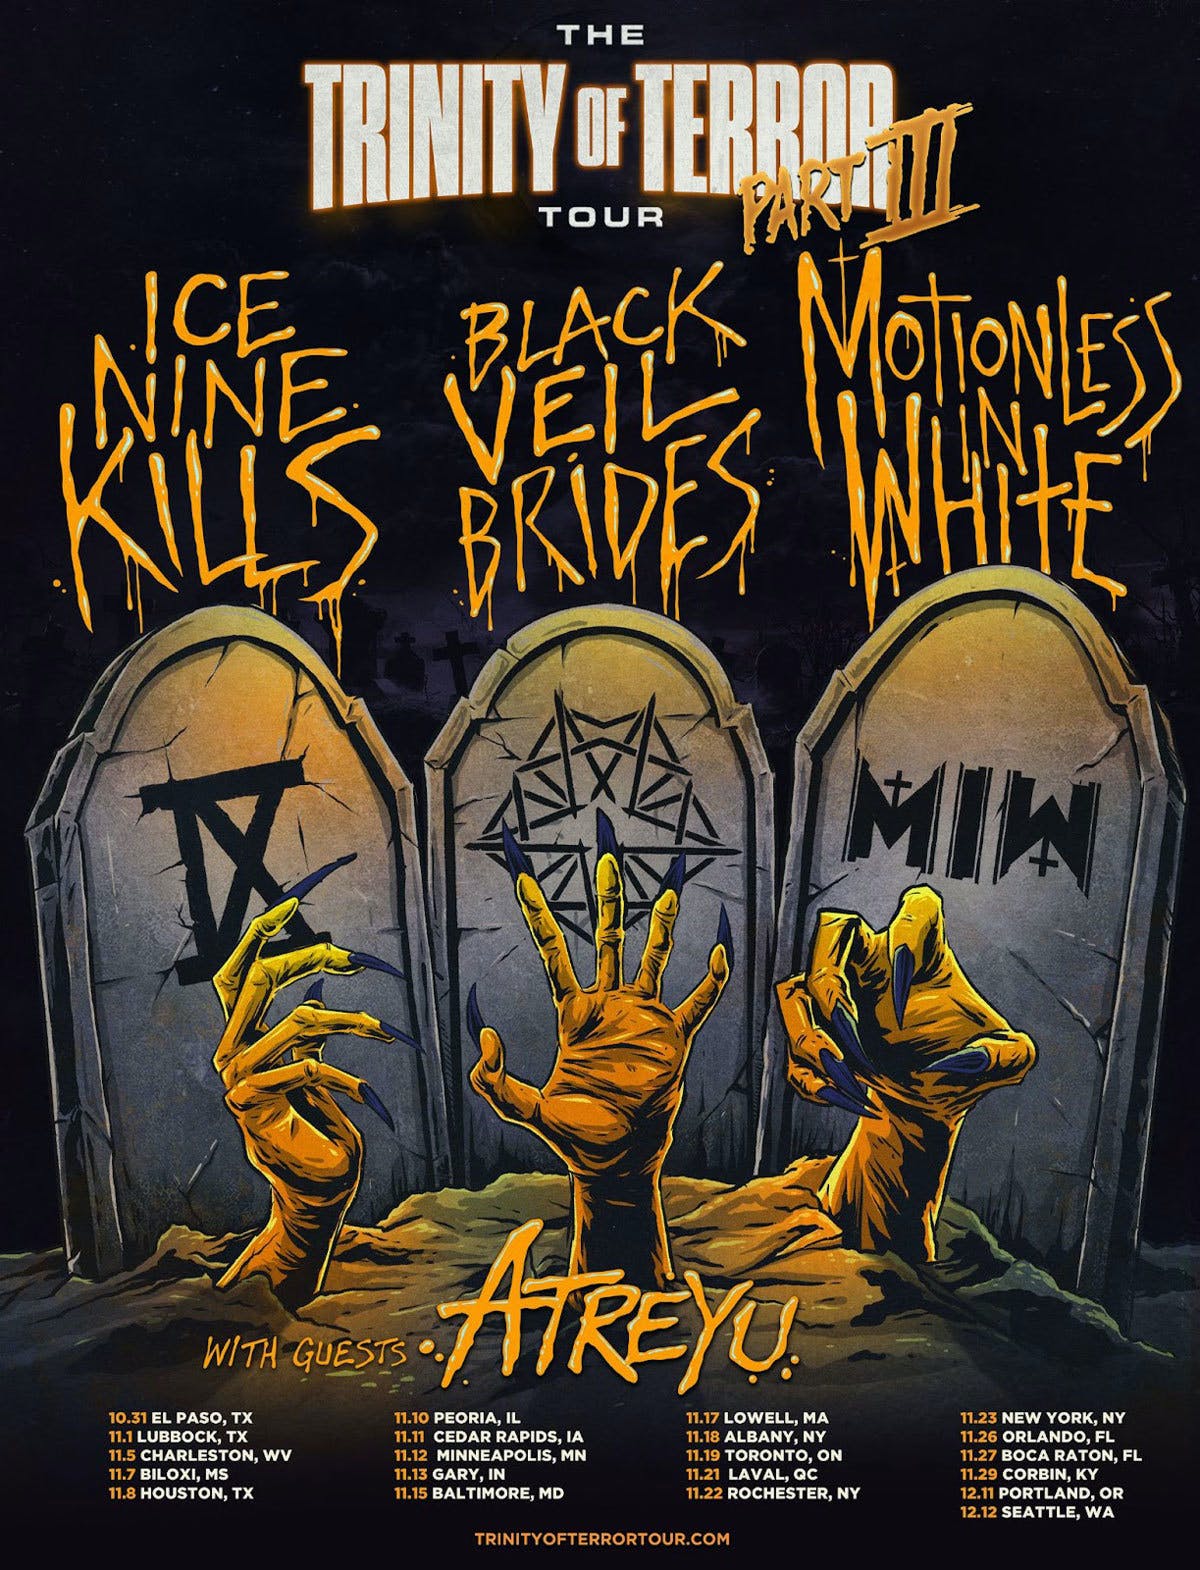 Trinity of Terror Tour - Black Veil Brides, Ice Nine Kills and Motionless In White